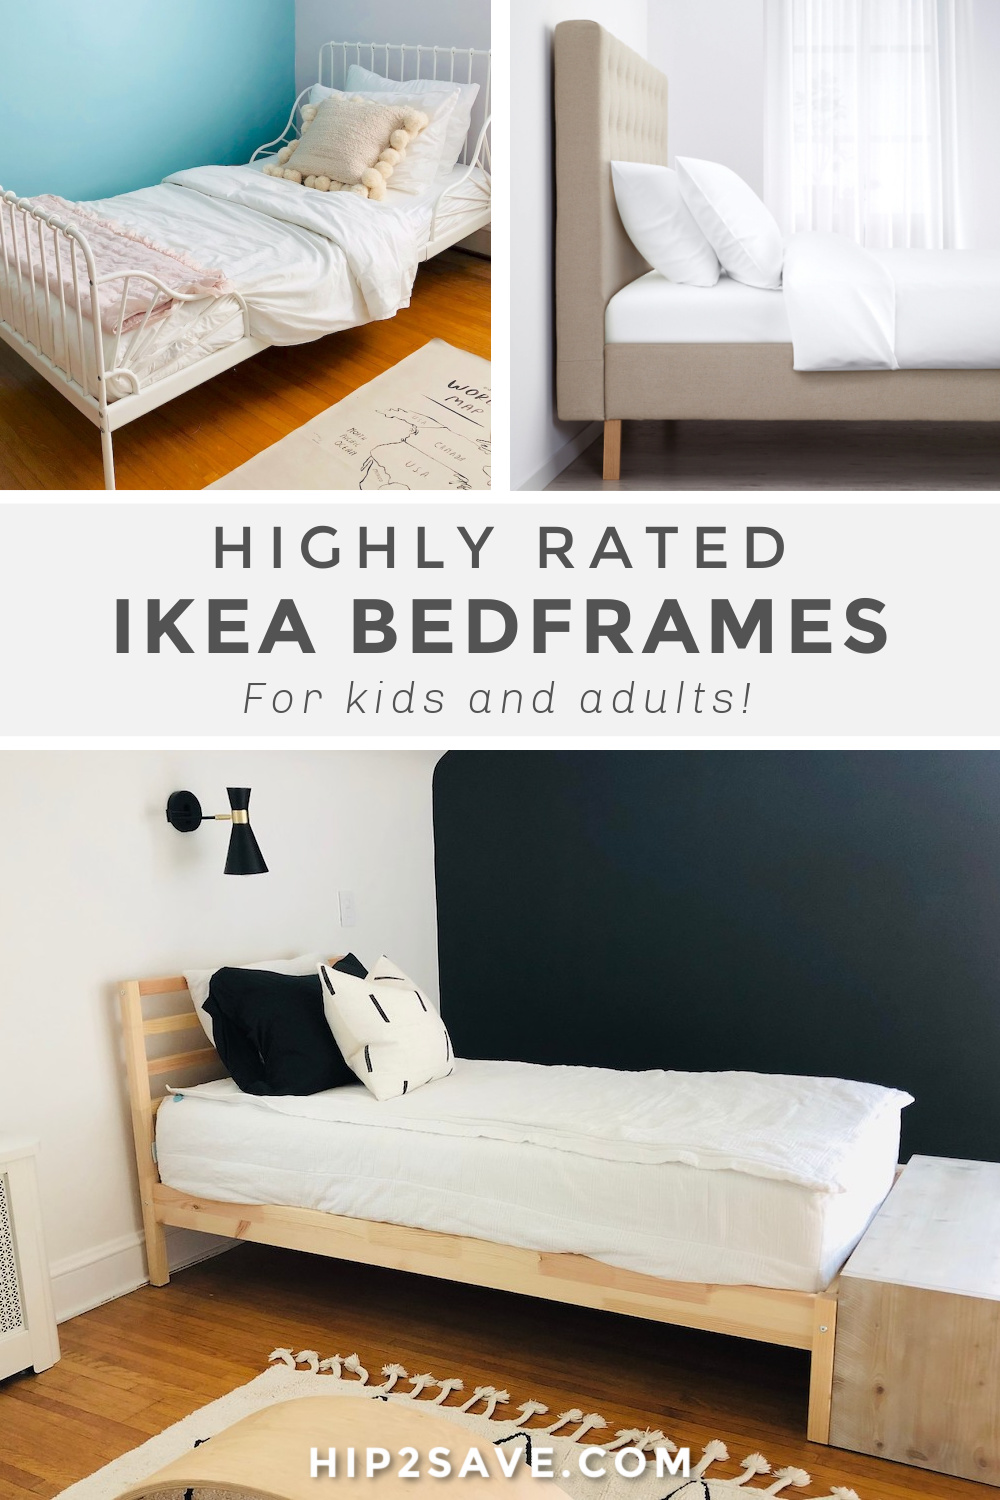 Hijsen Leer winter 9 of the Best IKEA Beds and Bed Frames - Loft & Kids Beds